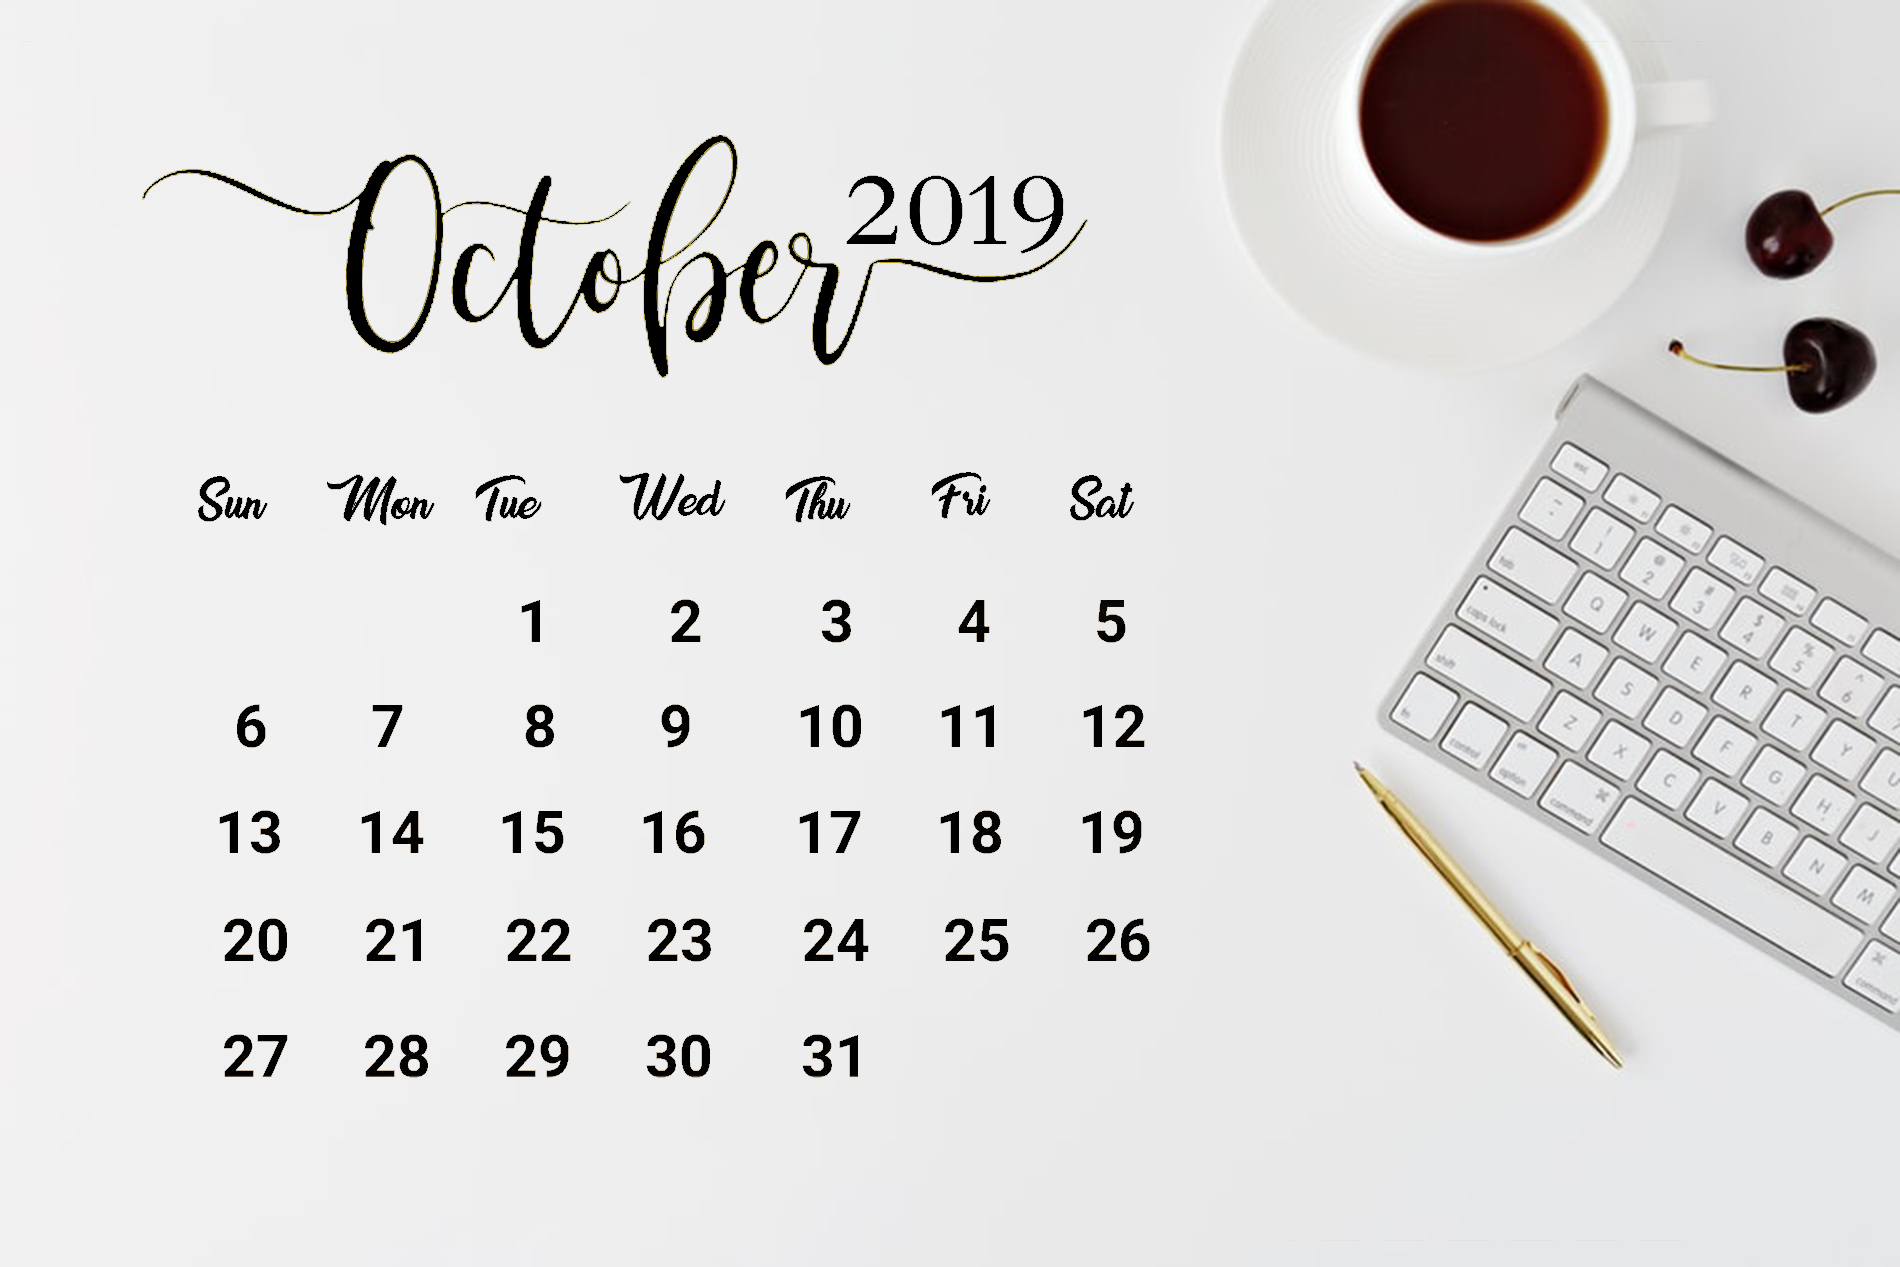 October 2019 Desk Calendar - October 2019 Desktop Calendar - HD Wallpaper 